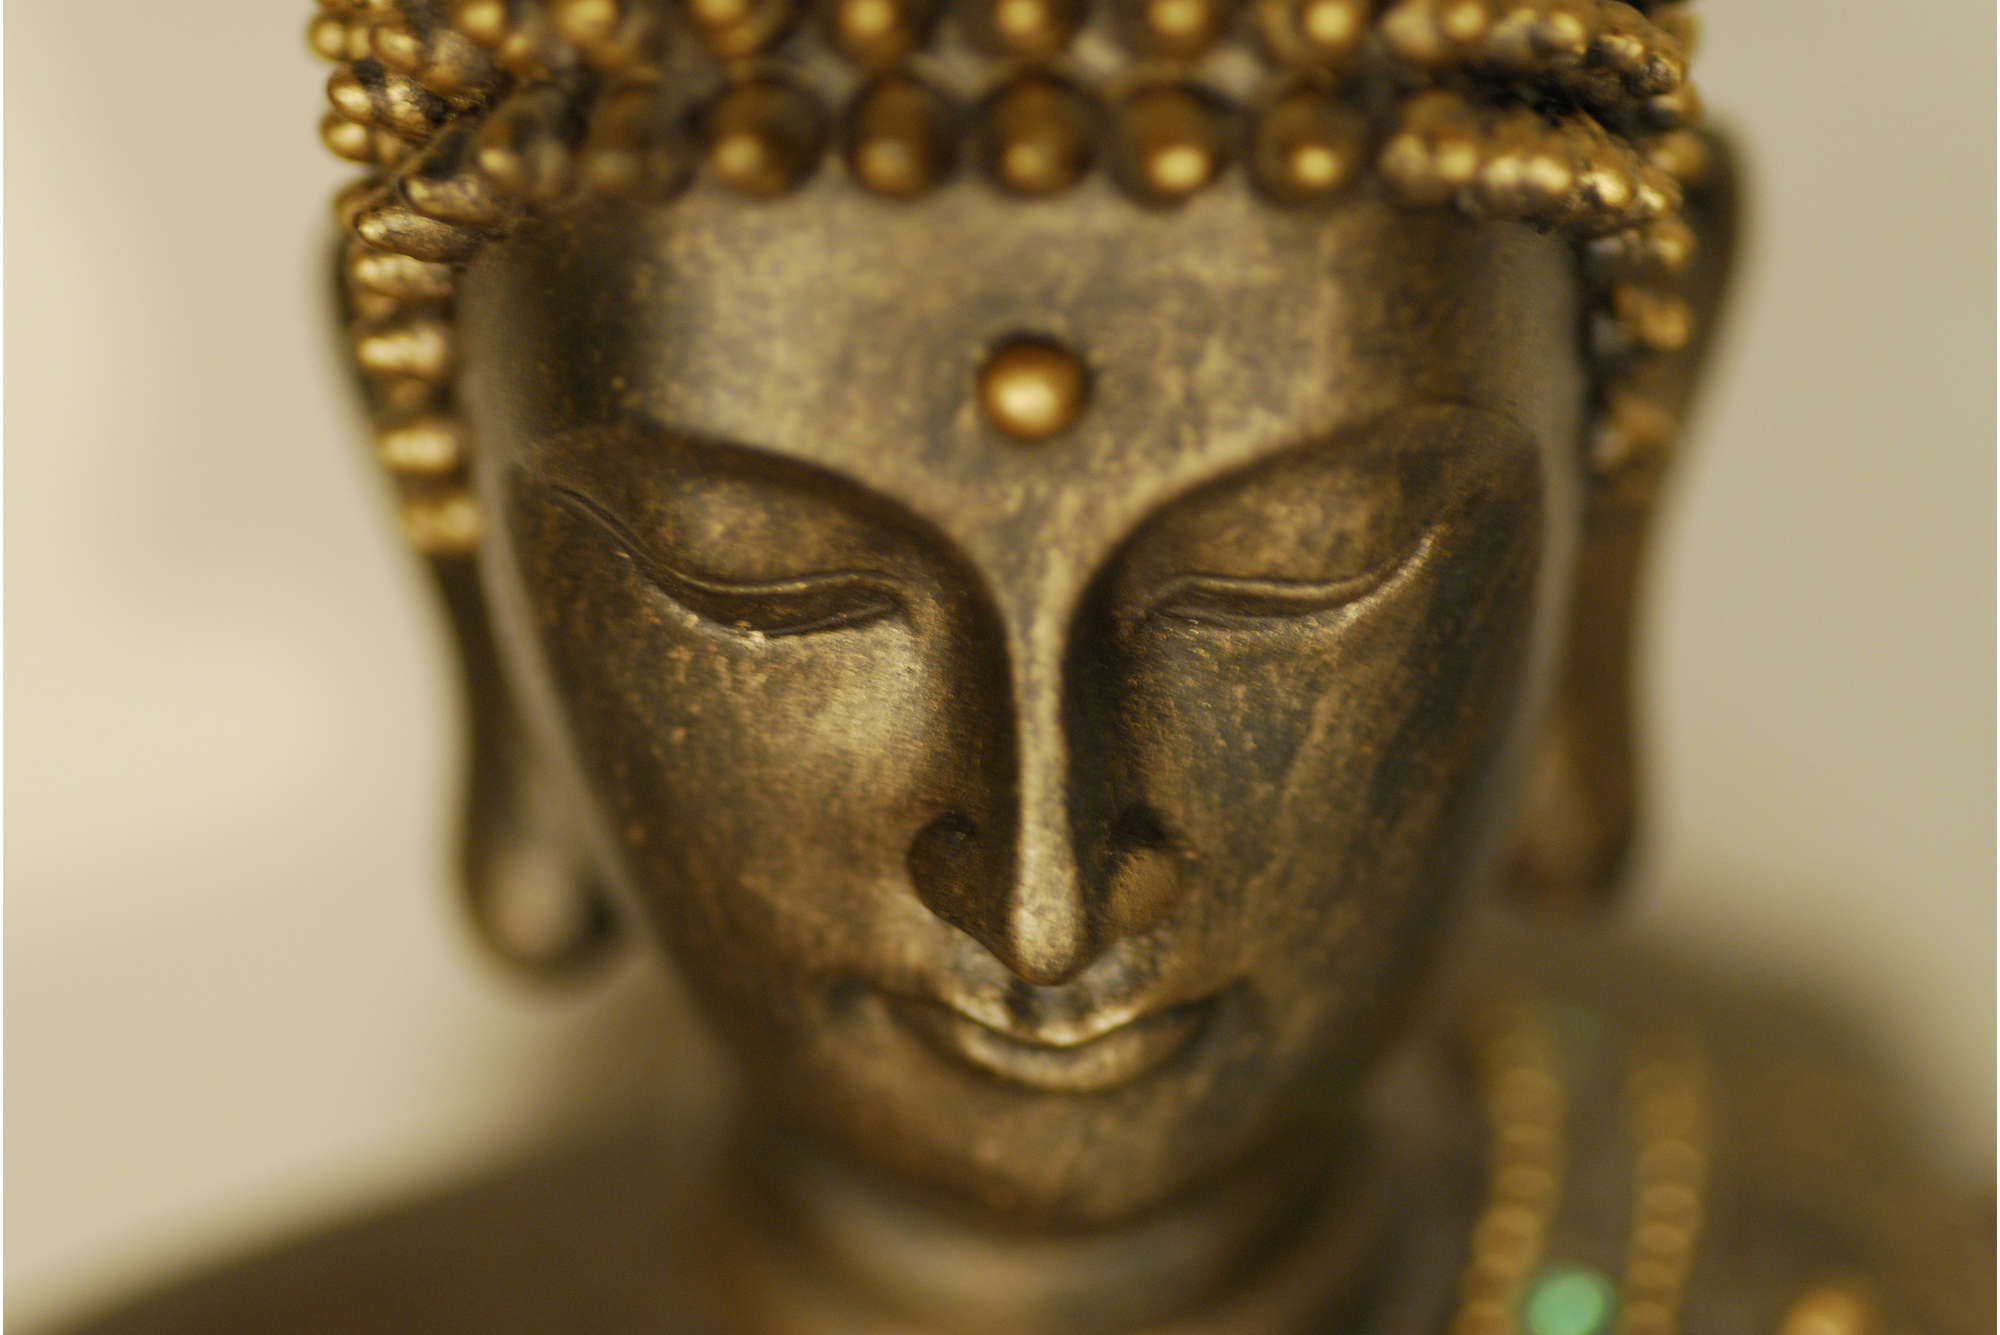             Digital behang close-up van Boeddha figuur - parelmoer glad vlies
        